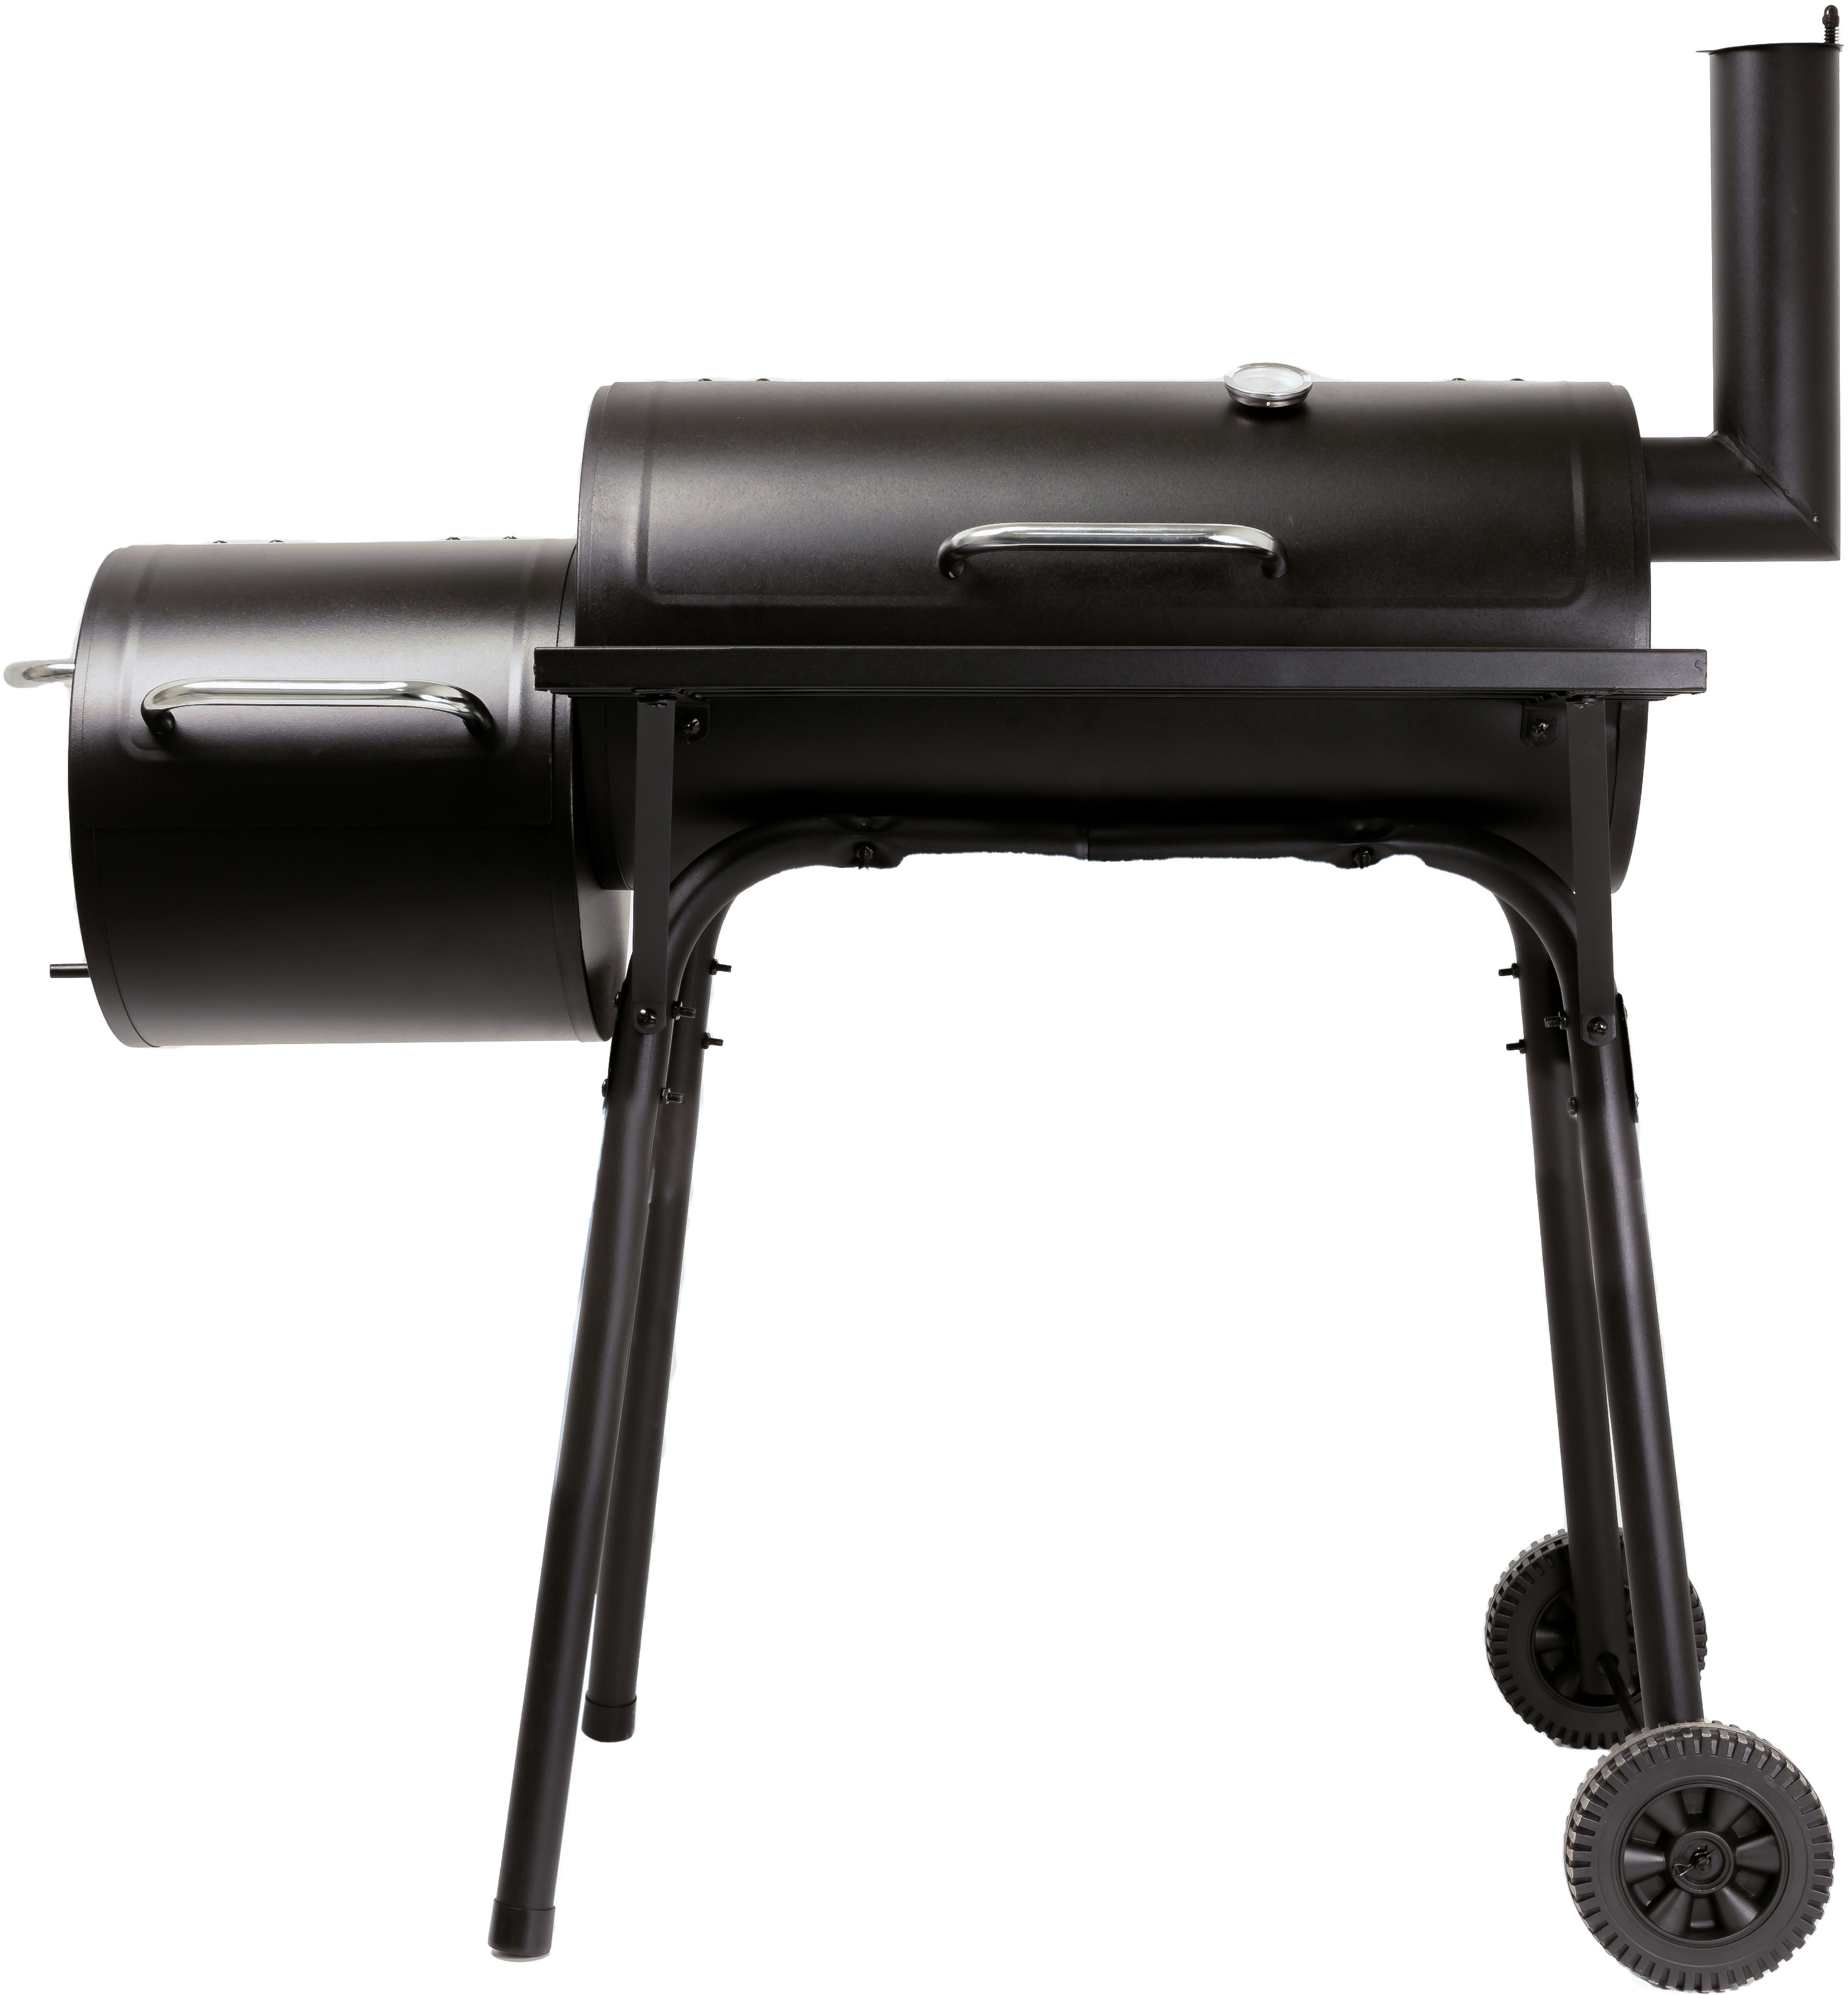 ACTIVA BBQ Smoker Grill Grillwagen Holzkohle mit Feuerbox BBQ Grill Smoker Kombination, Grillwagen Holzkohlegrill mit Smoker, Barbecue